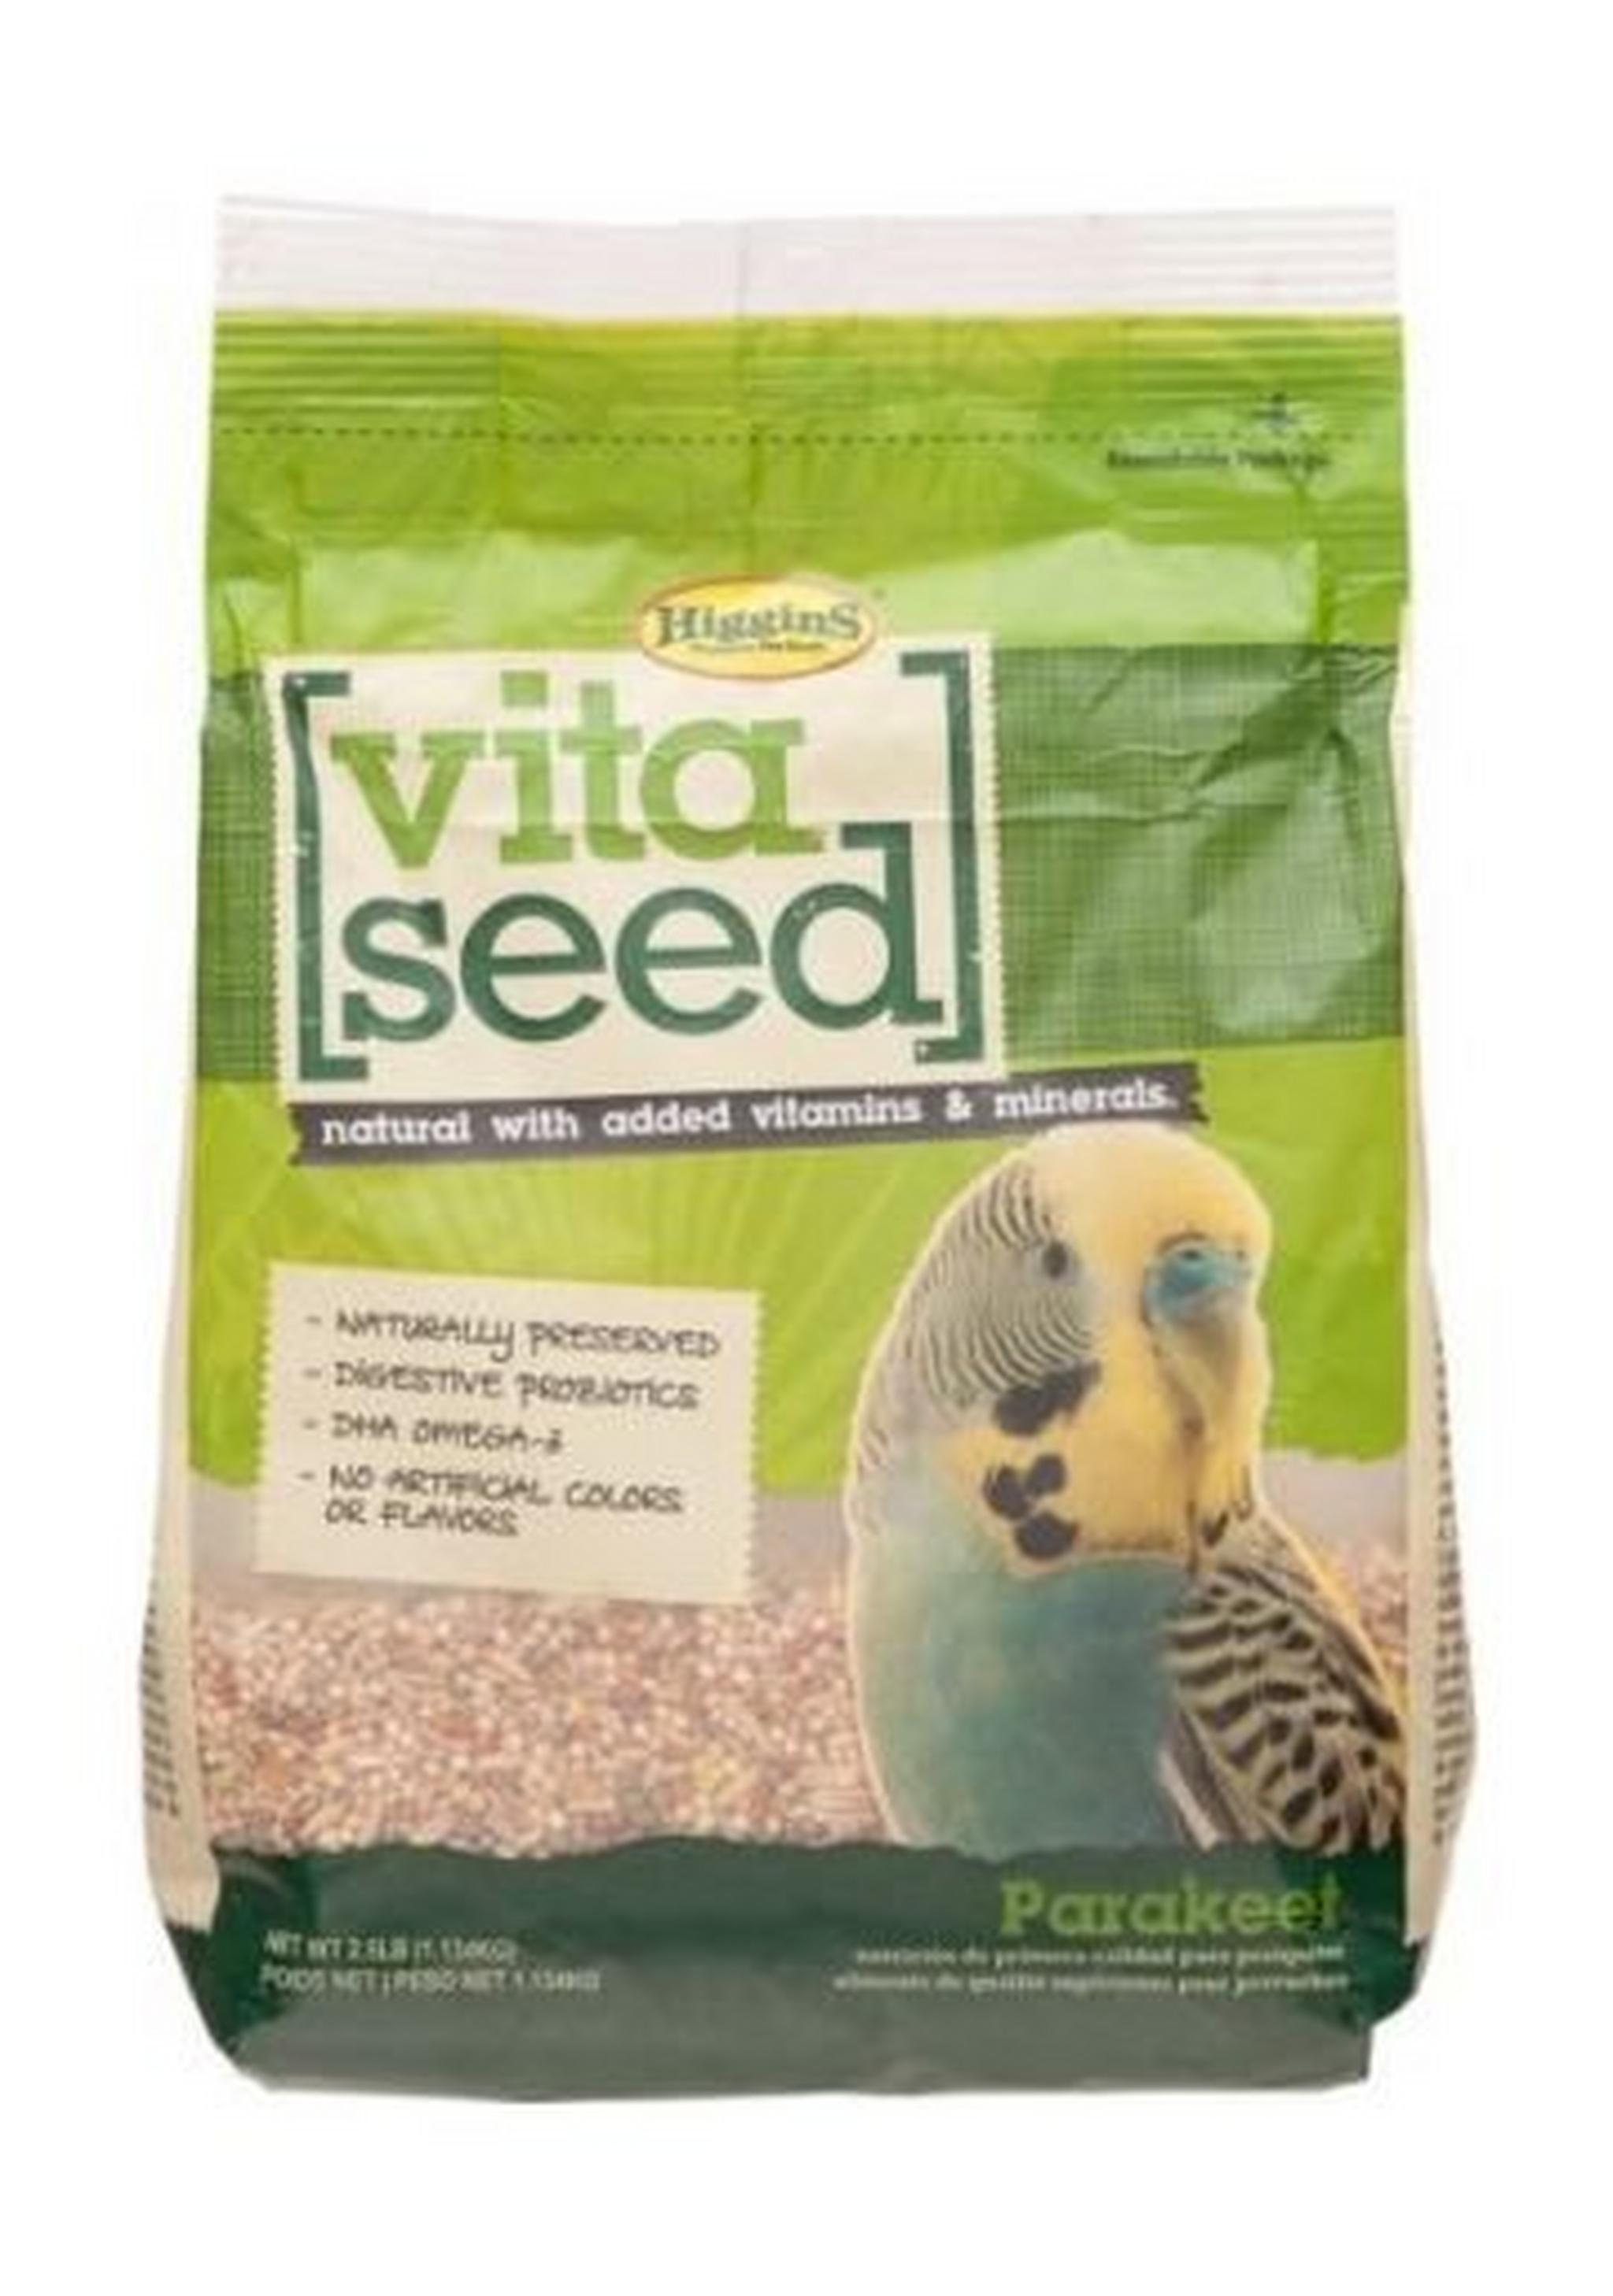 Higgins Vita Seed Parakeet Food - 1.36 KG.